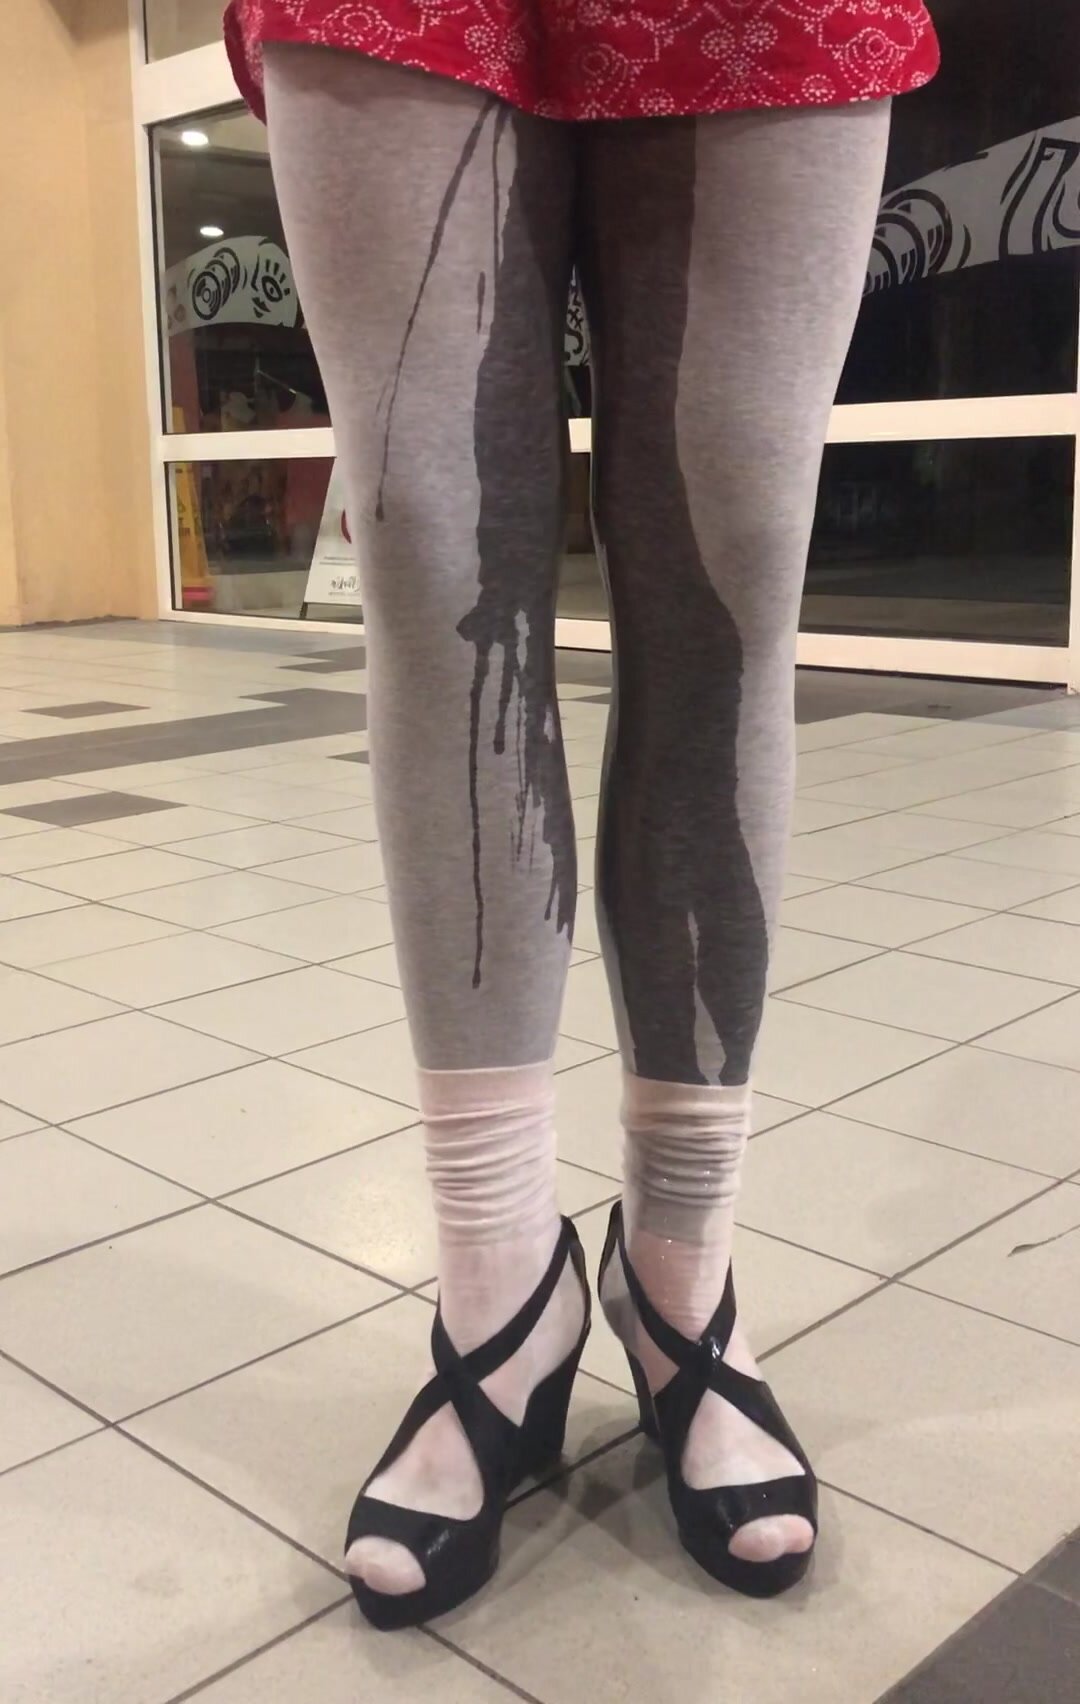 Wetting Grey Leggings in Public